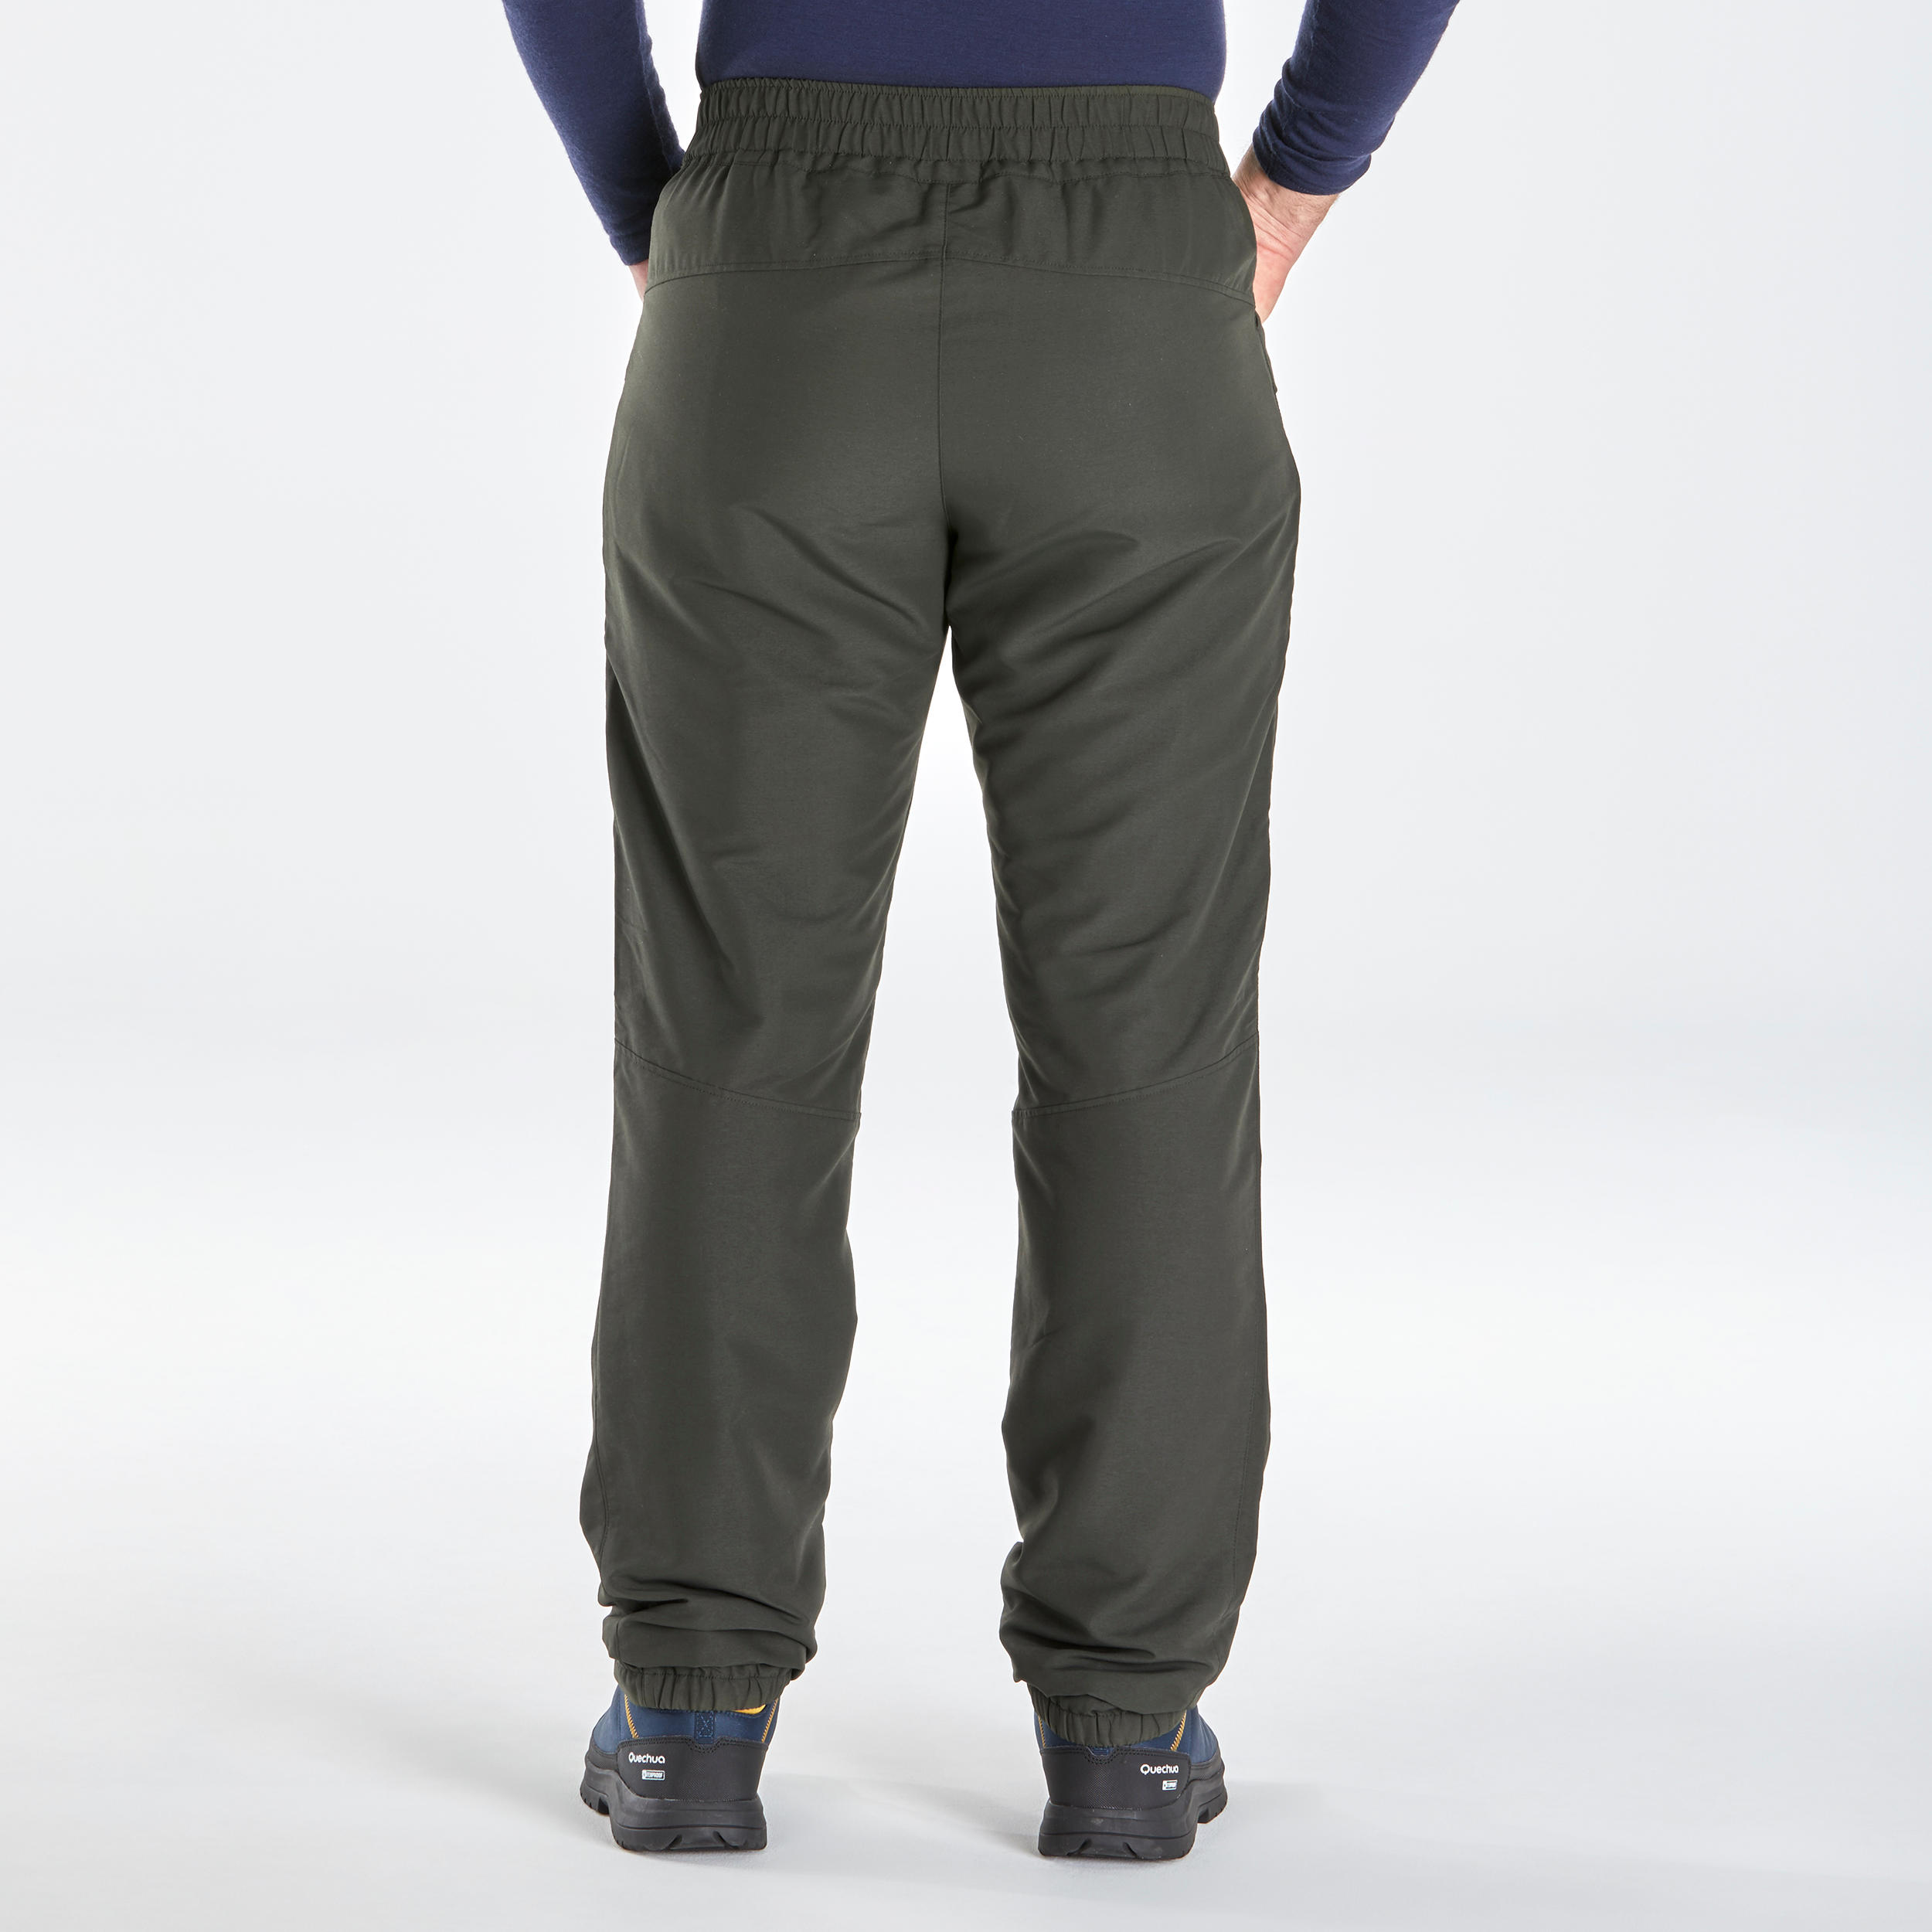 Buy By Decathlon Men Black  Blue Colourblocked Water Resistant Sporty  Jacket online  Looksgudin